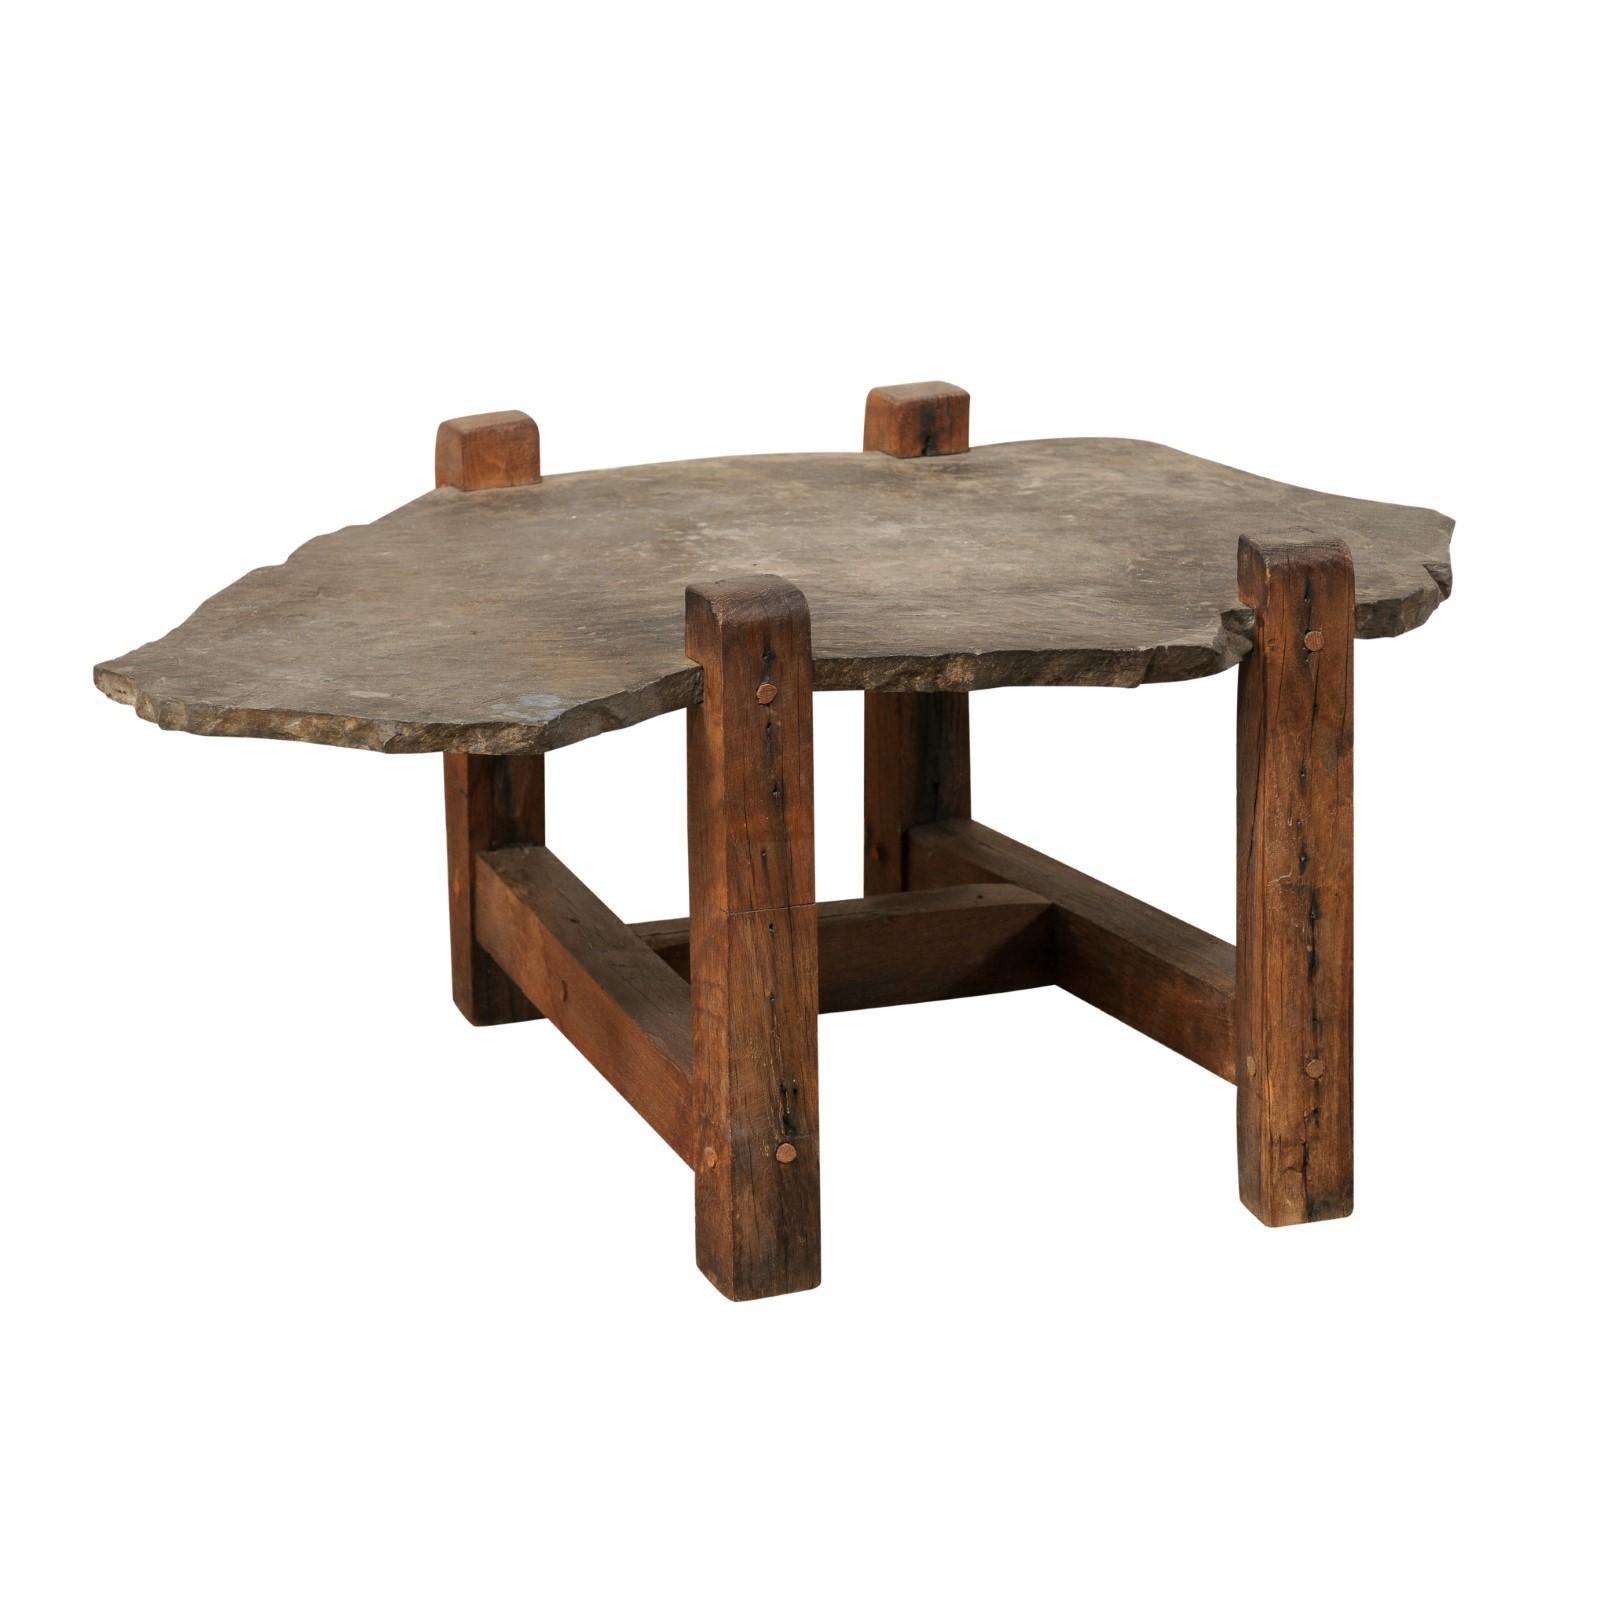 Organic-Shaped Slate Top Coffee Table on Wood Base